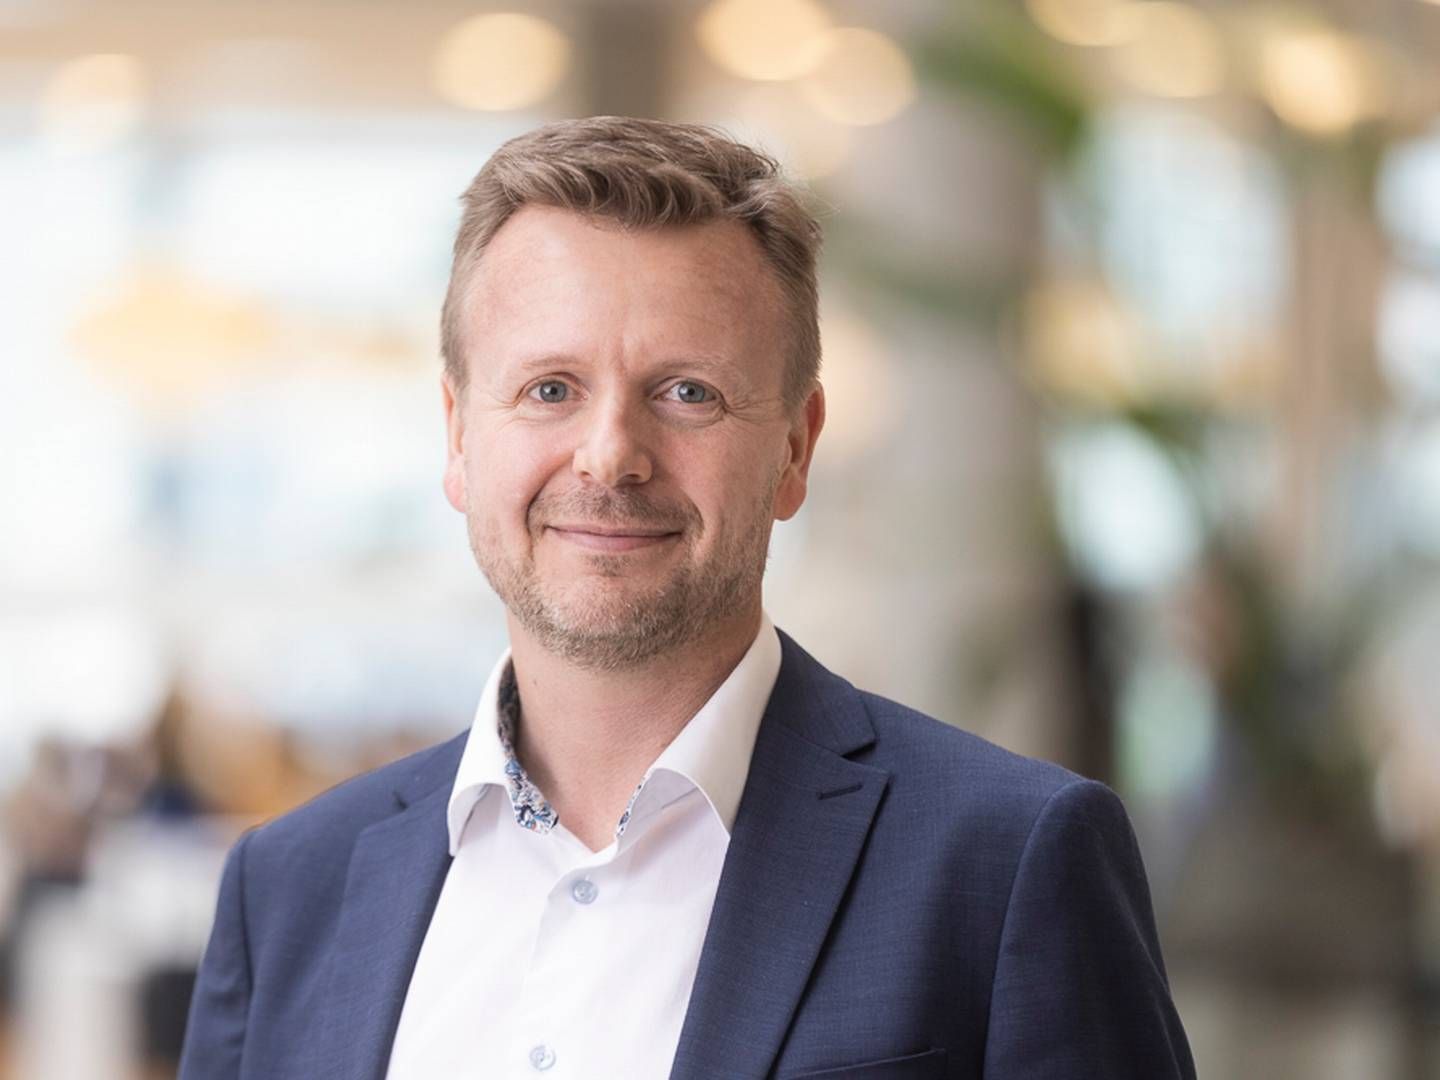 Martin Rune Pedersen er landechef for Total Energies i Danmark. | Foto: Totalenergies Danmark